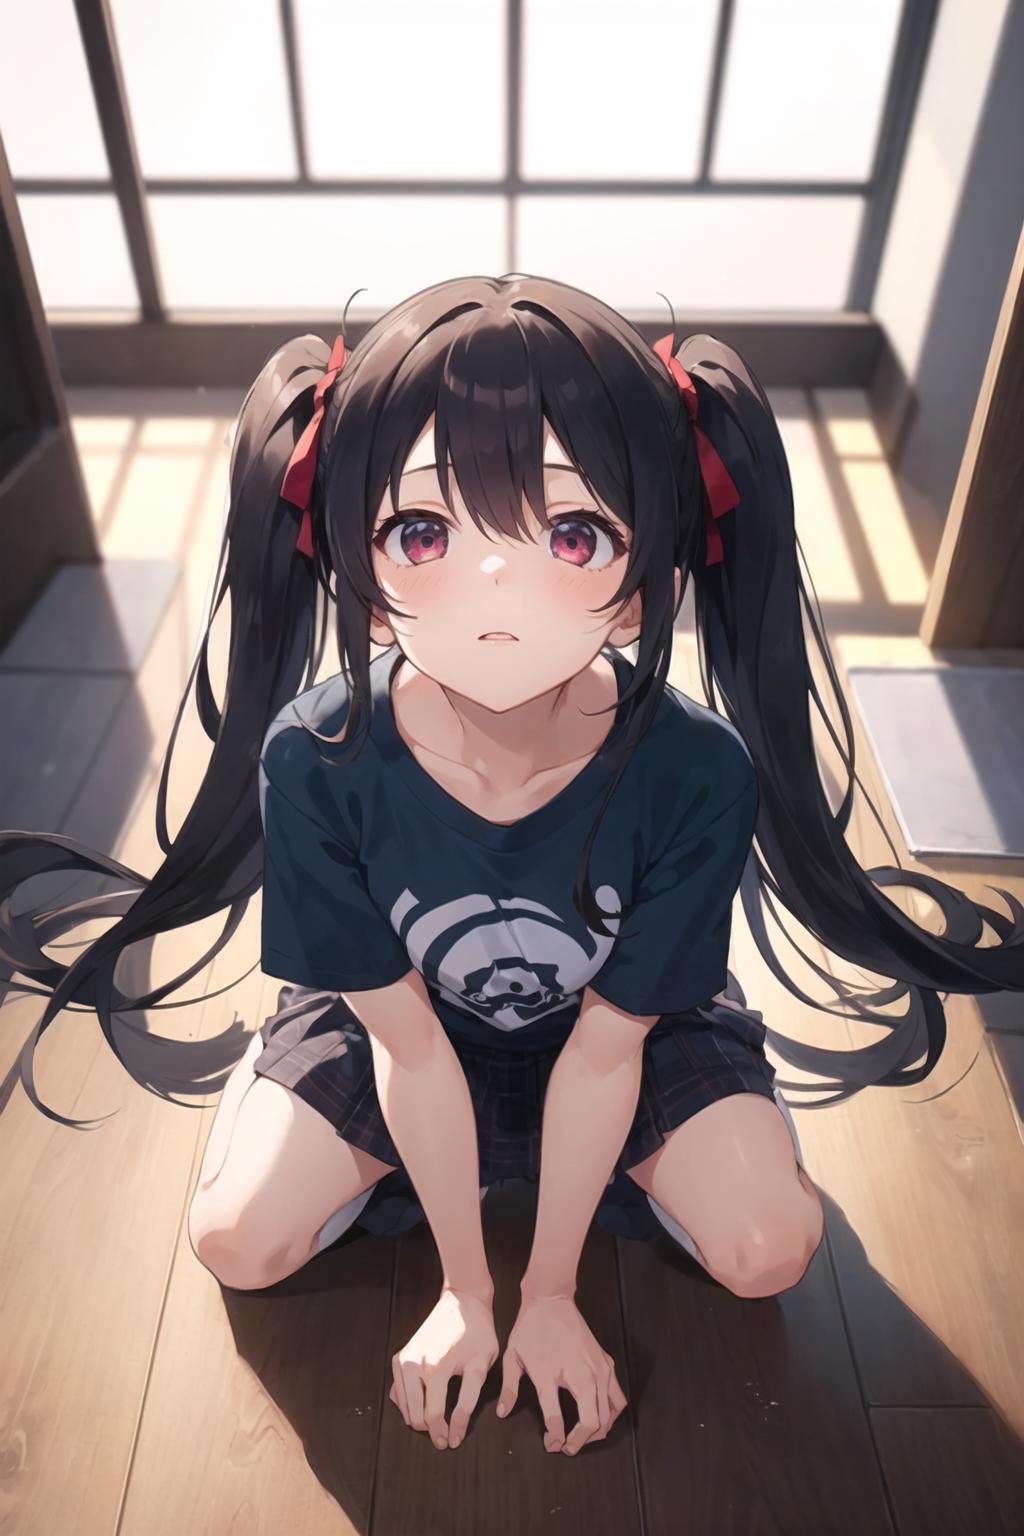 Anime girl kneeling pose - CLIP STUDIO ASSETS